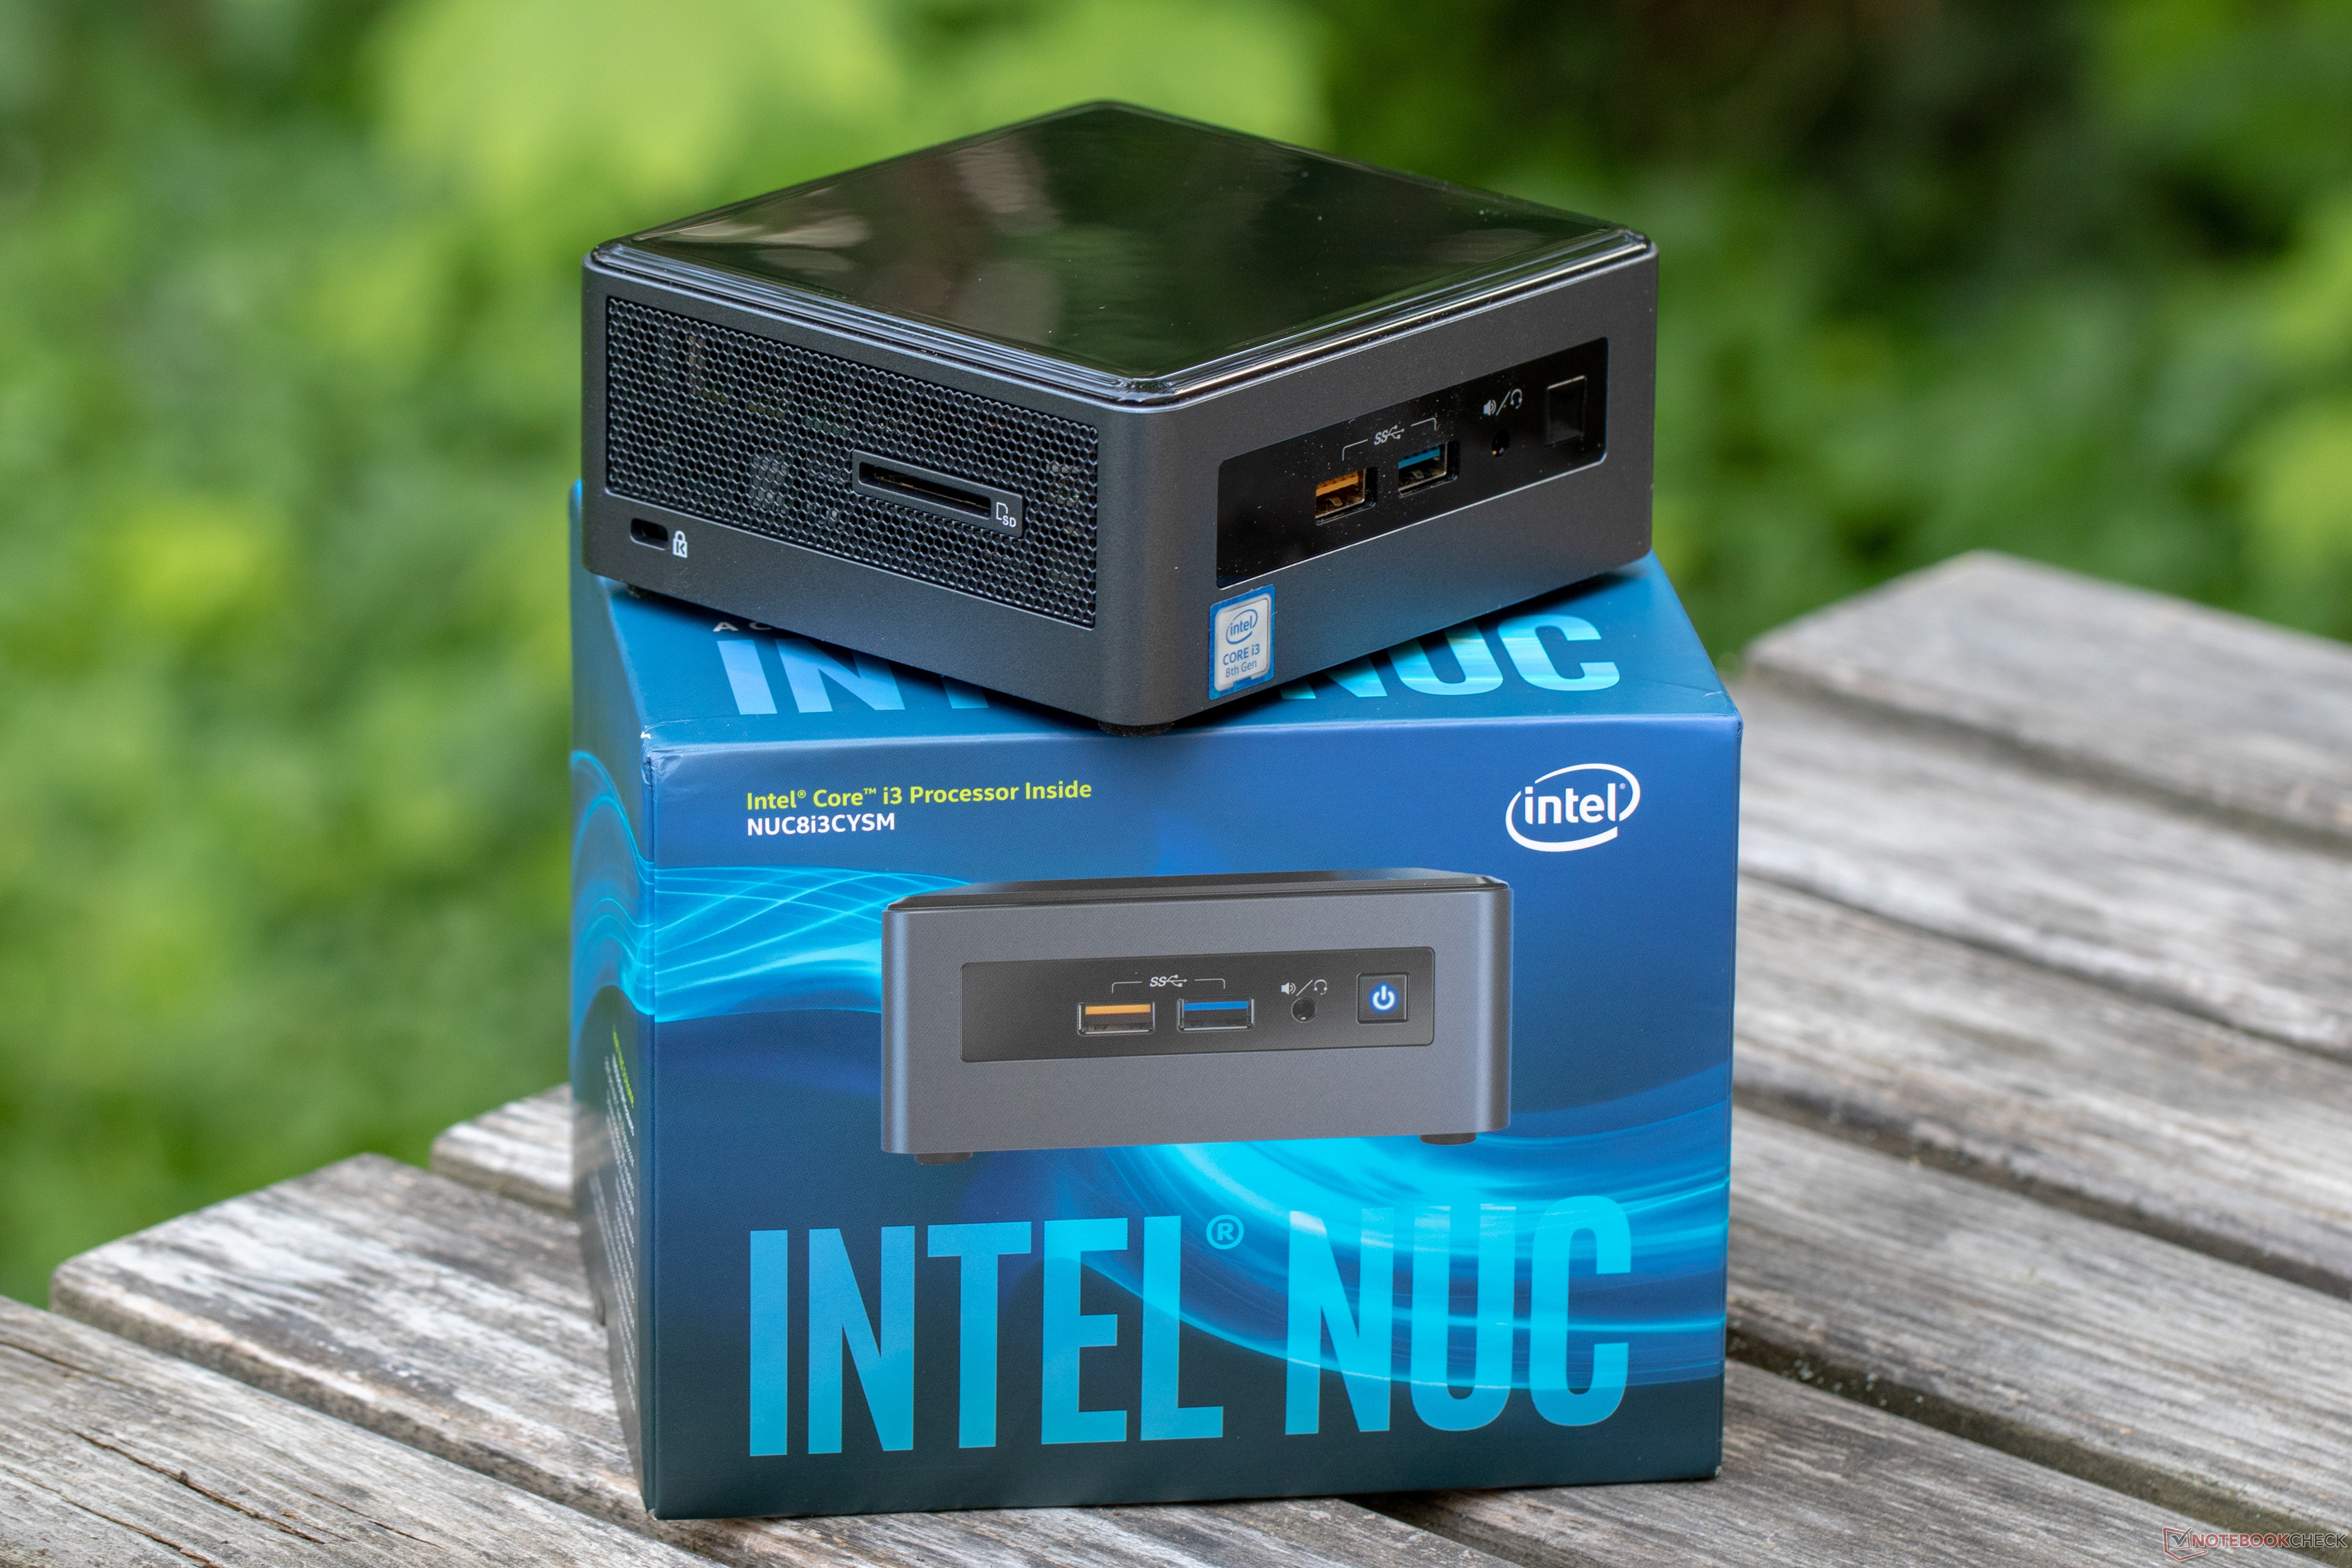 Intel NUC8i3CYSM Review - NotebookCheck.net Reviews